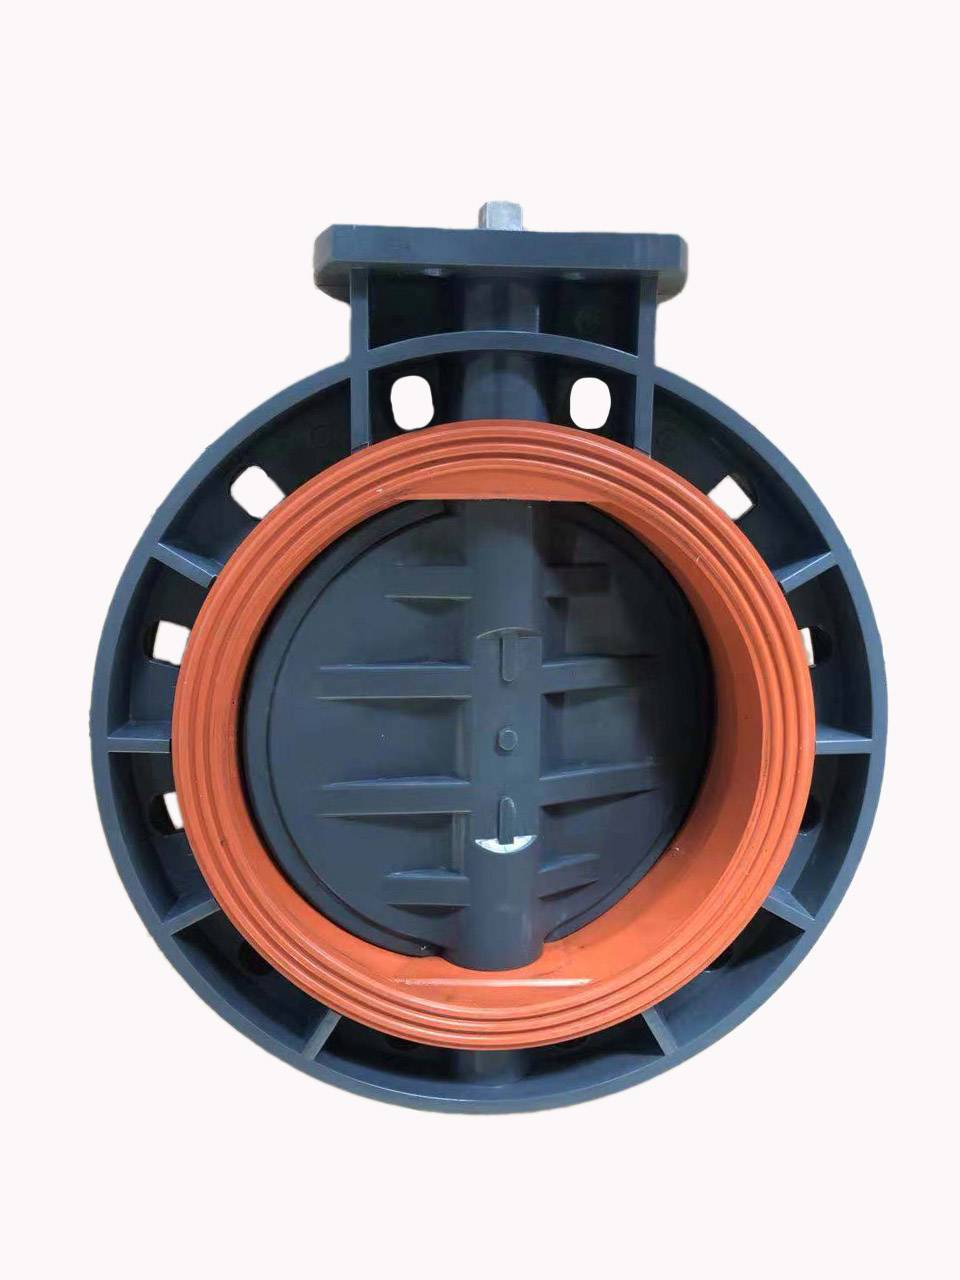 Manufactur standard Forging Gate Valves - UPVC butterfly valve Square head stem Mounting pad ISO5211 – DA YU PLASTIC